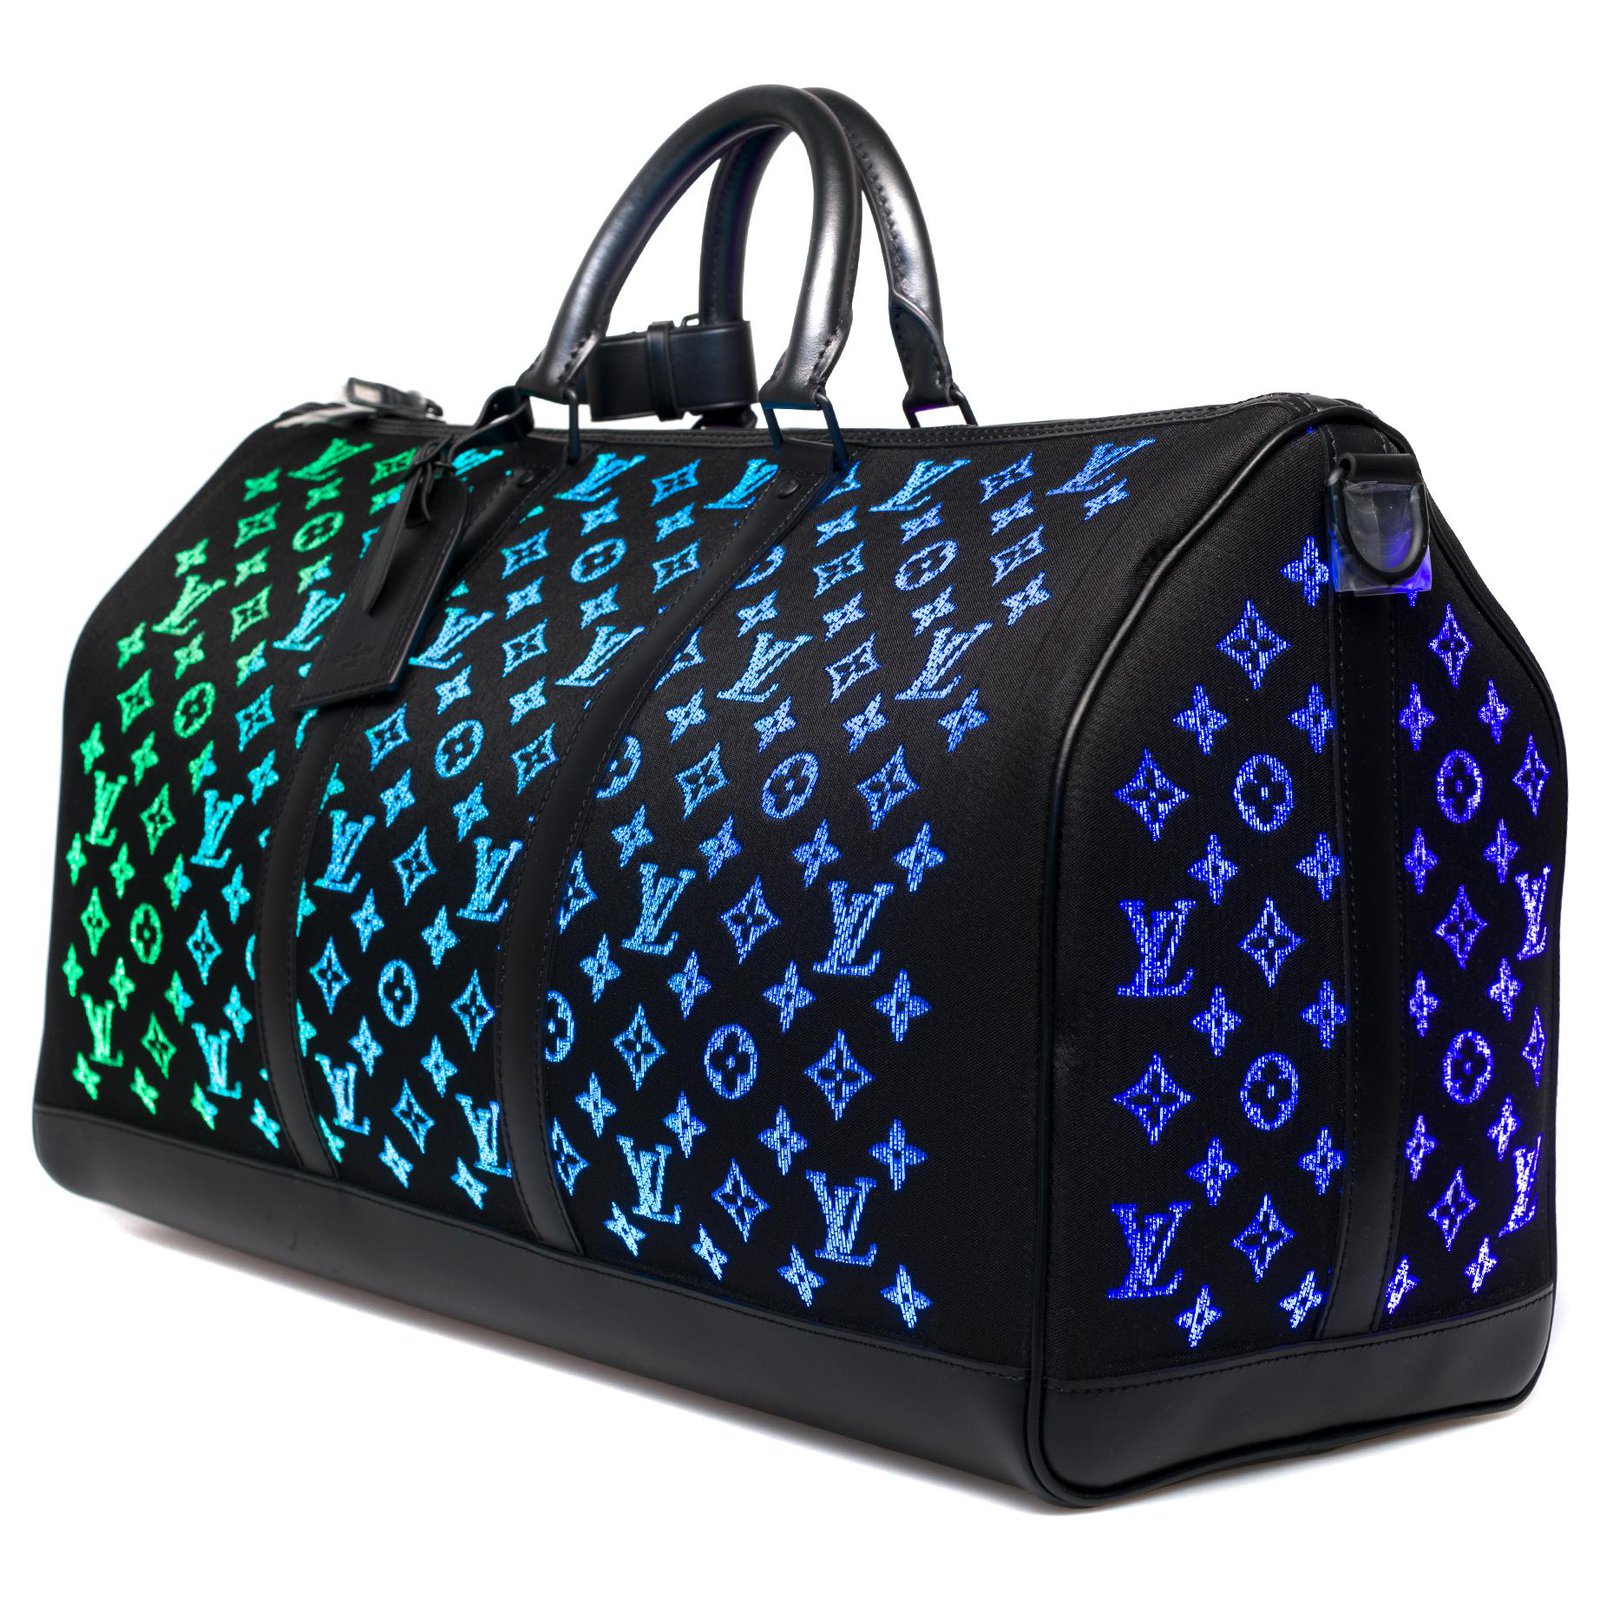 Buy Louis Vuitton Keepall LED Monogram 50 Black Online in Australia